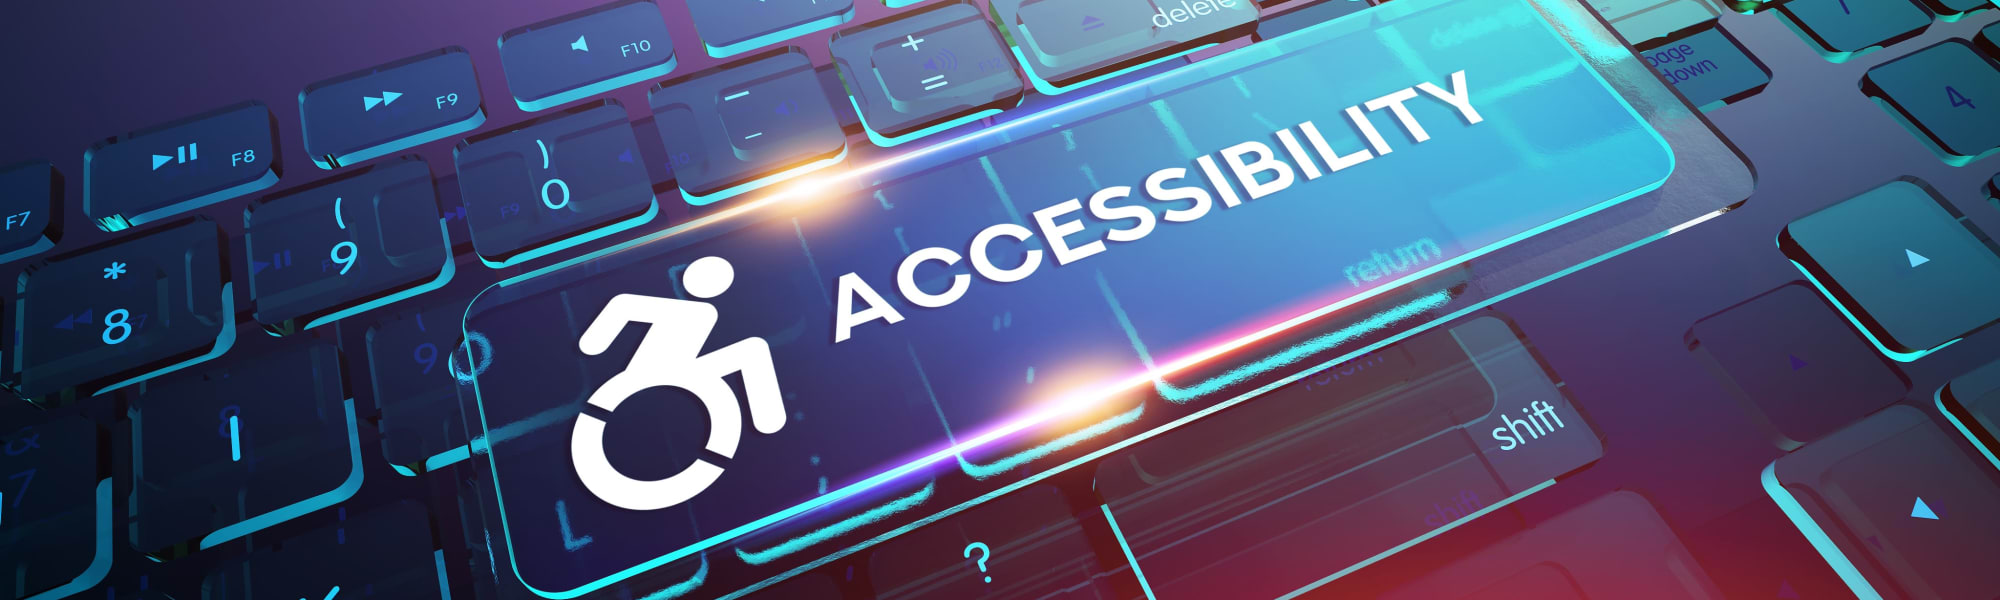 Accessibility policy for The Tessera in Phoenix, Arizona